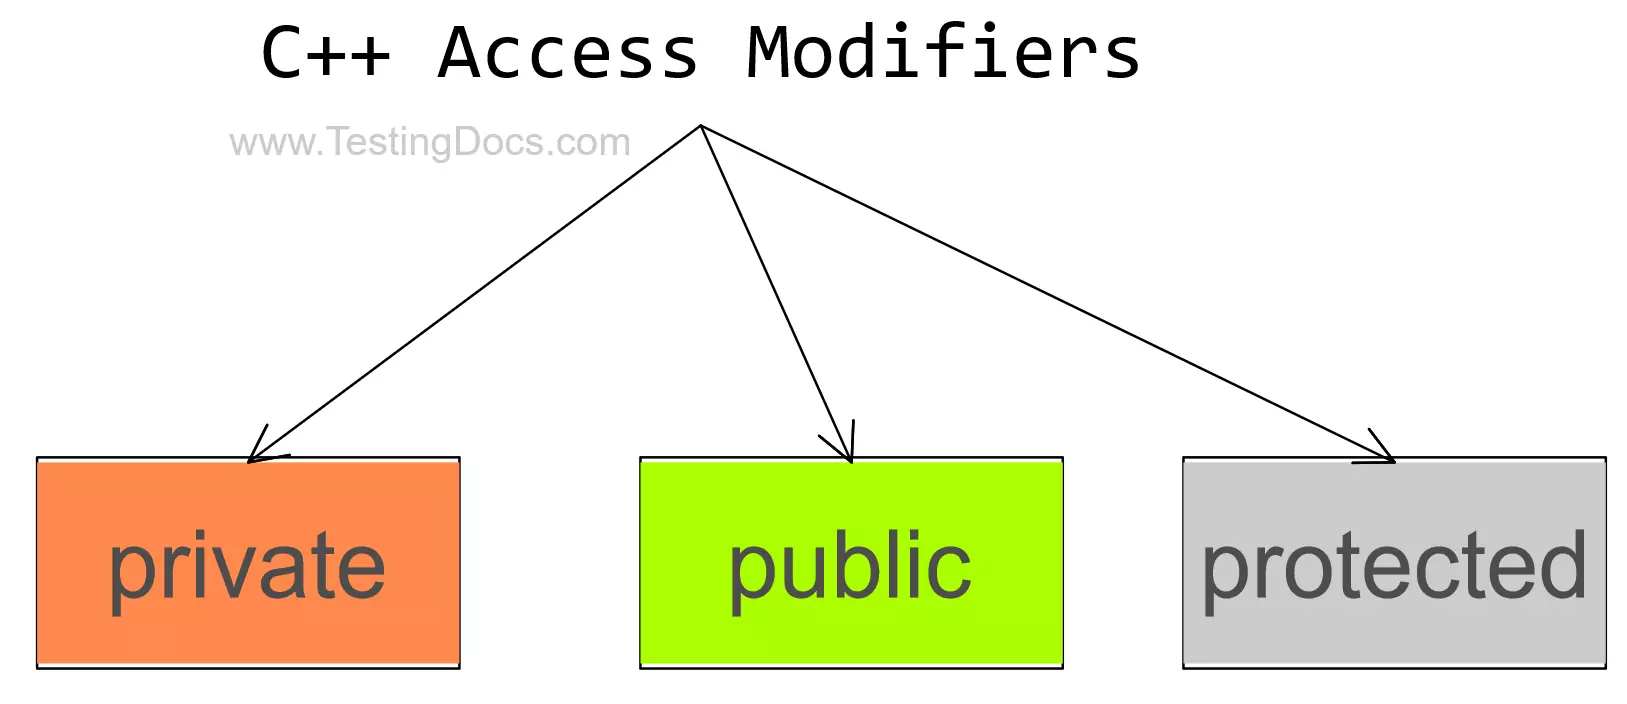 C++ Access Modifiers